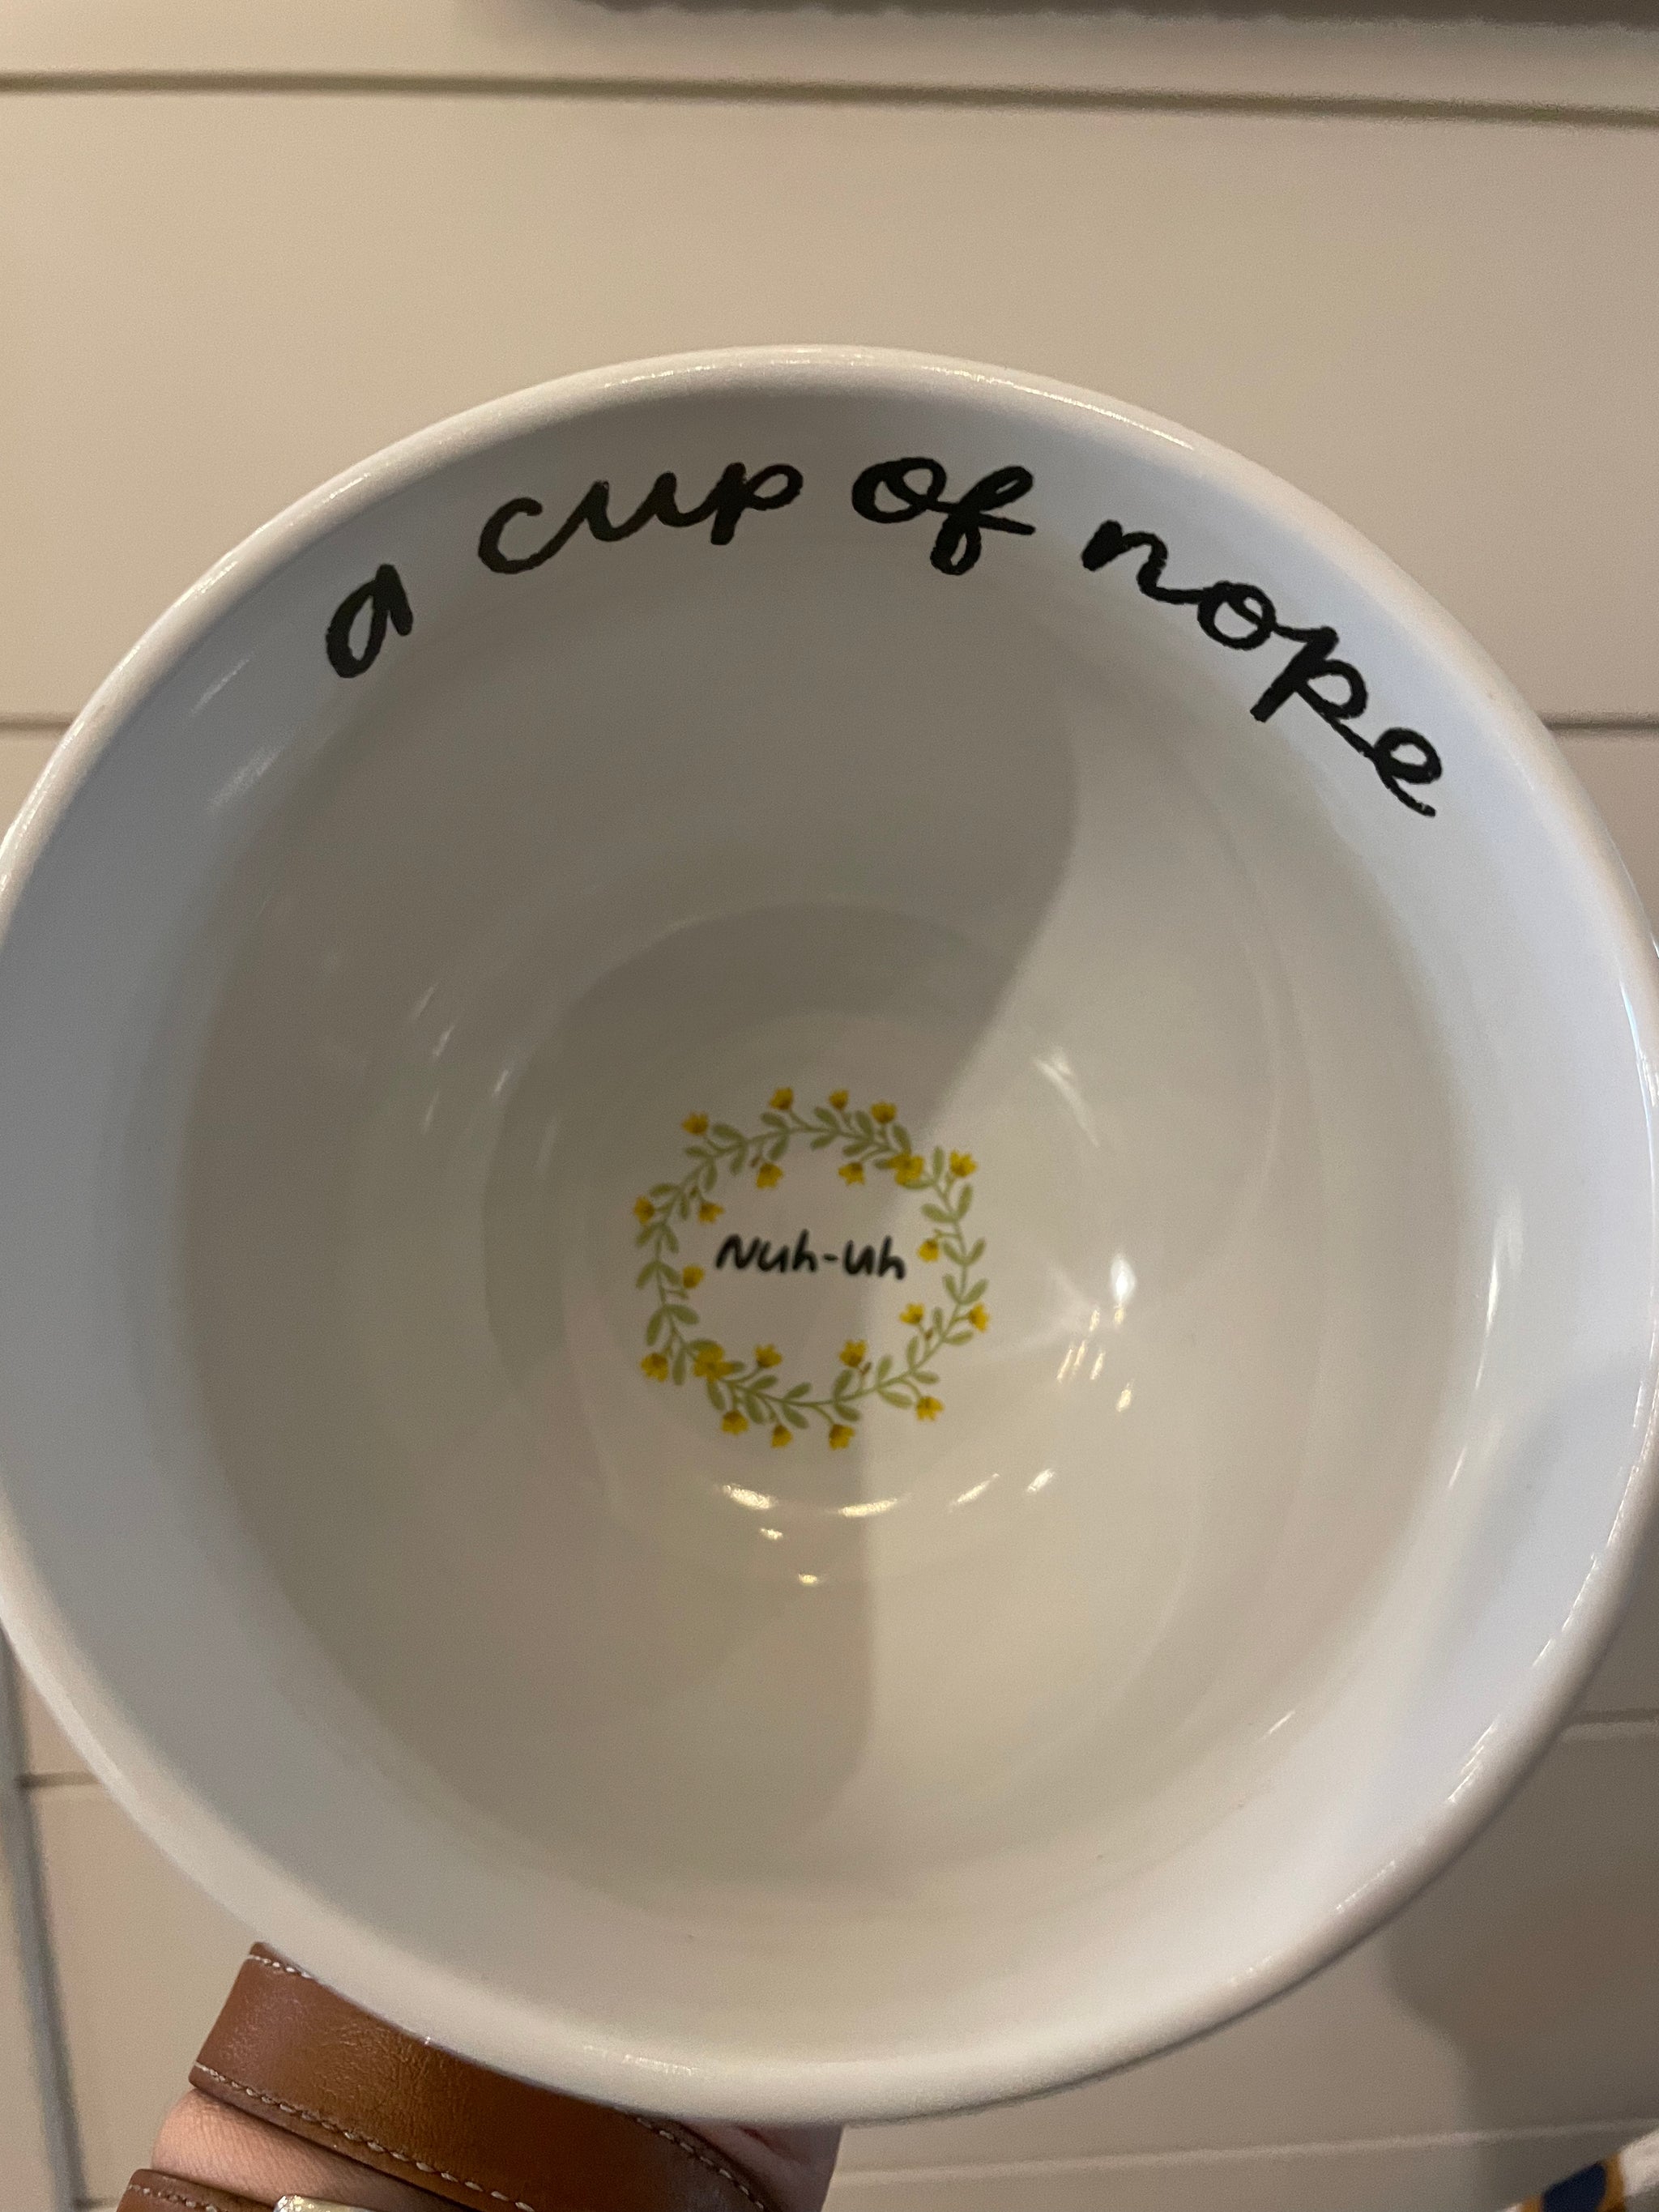 Cup of Nope